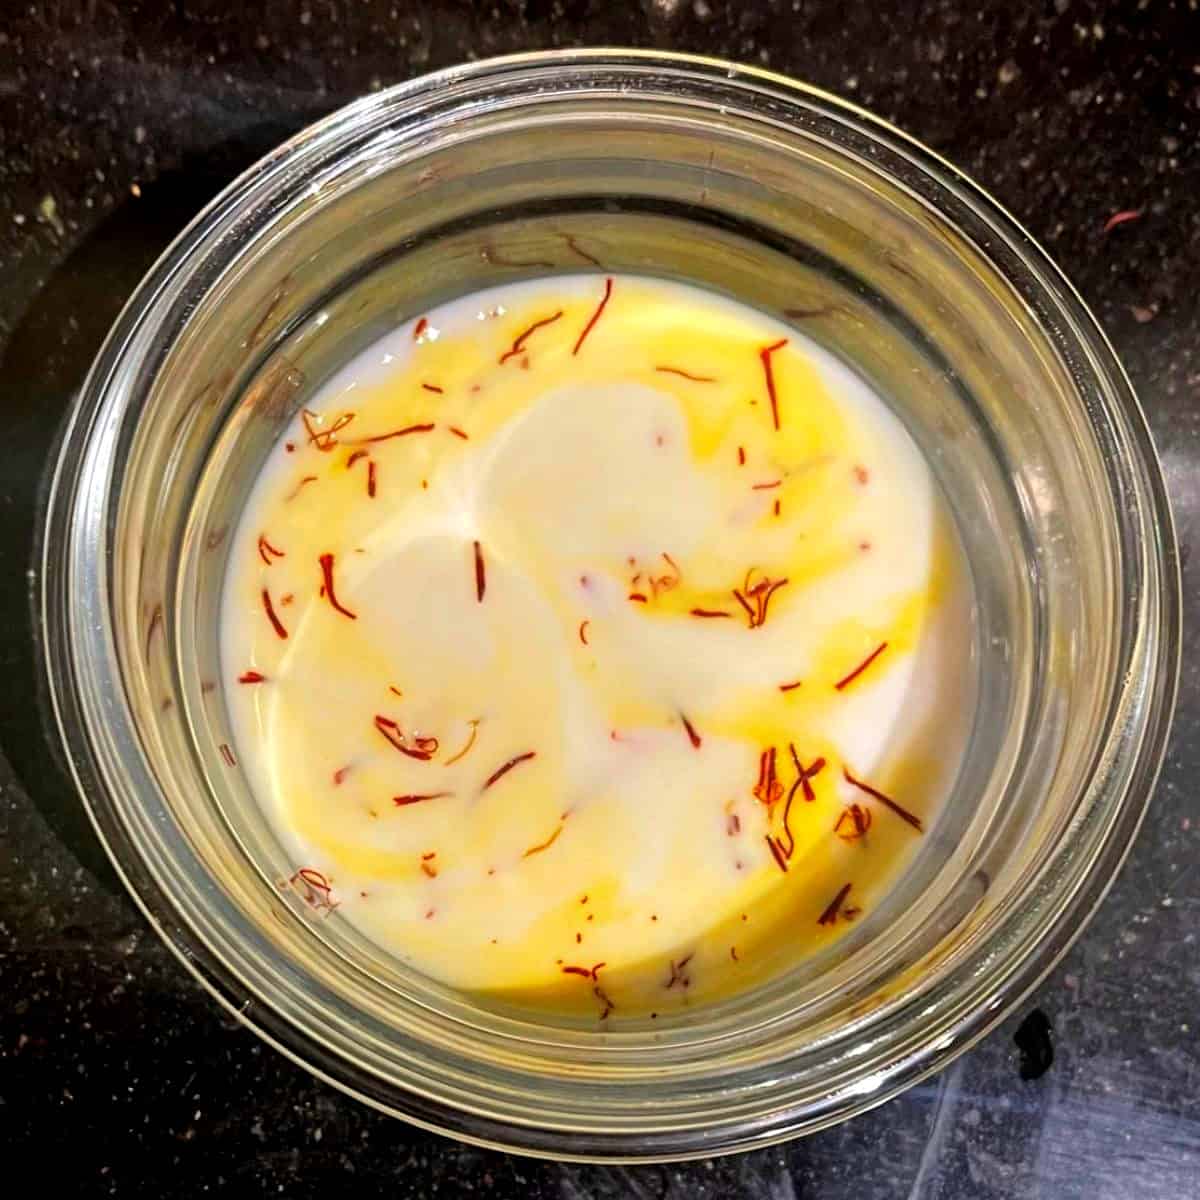 Saffron soaking in milk.